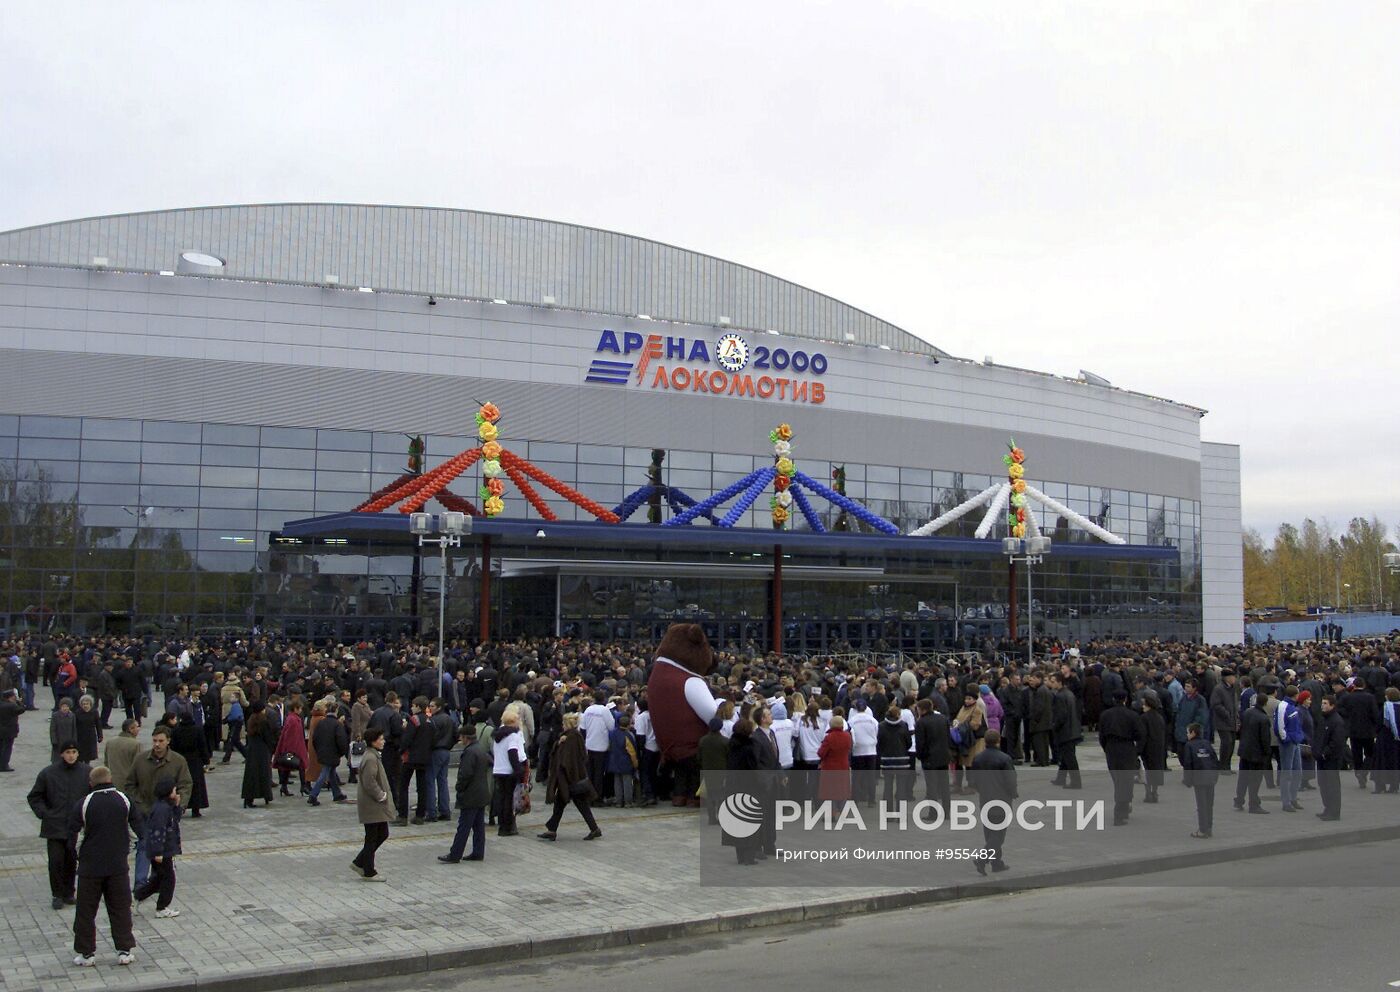 Стадион "Арена-2000. Локомотив"